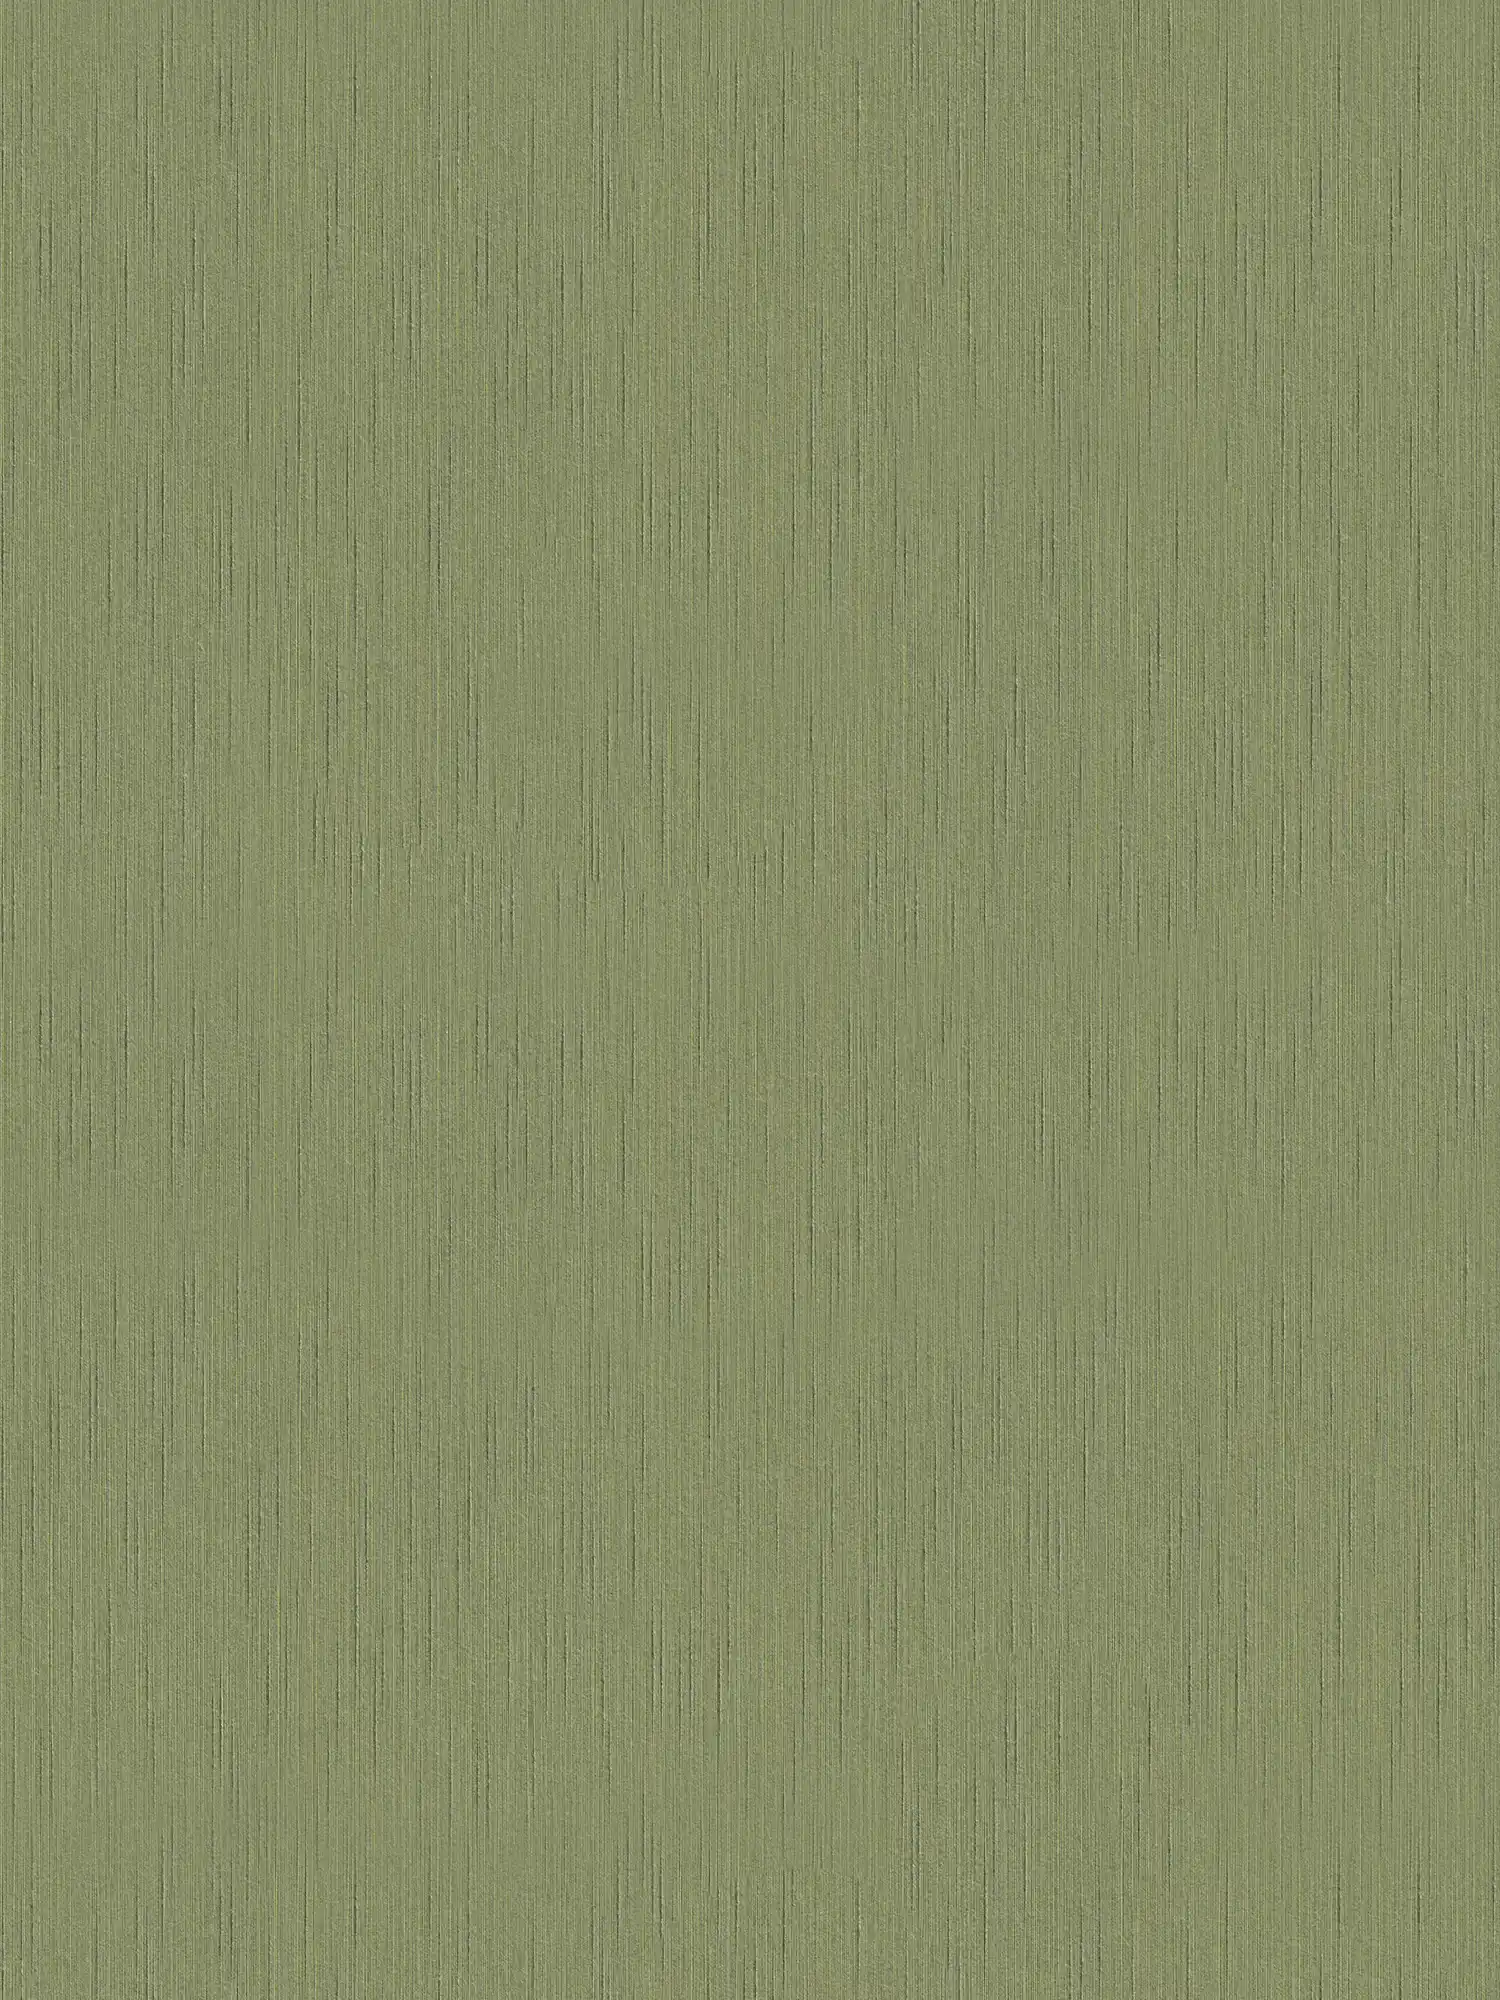 Dark green non-woven wallpaper with mottled texture - green
